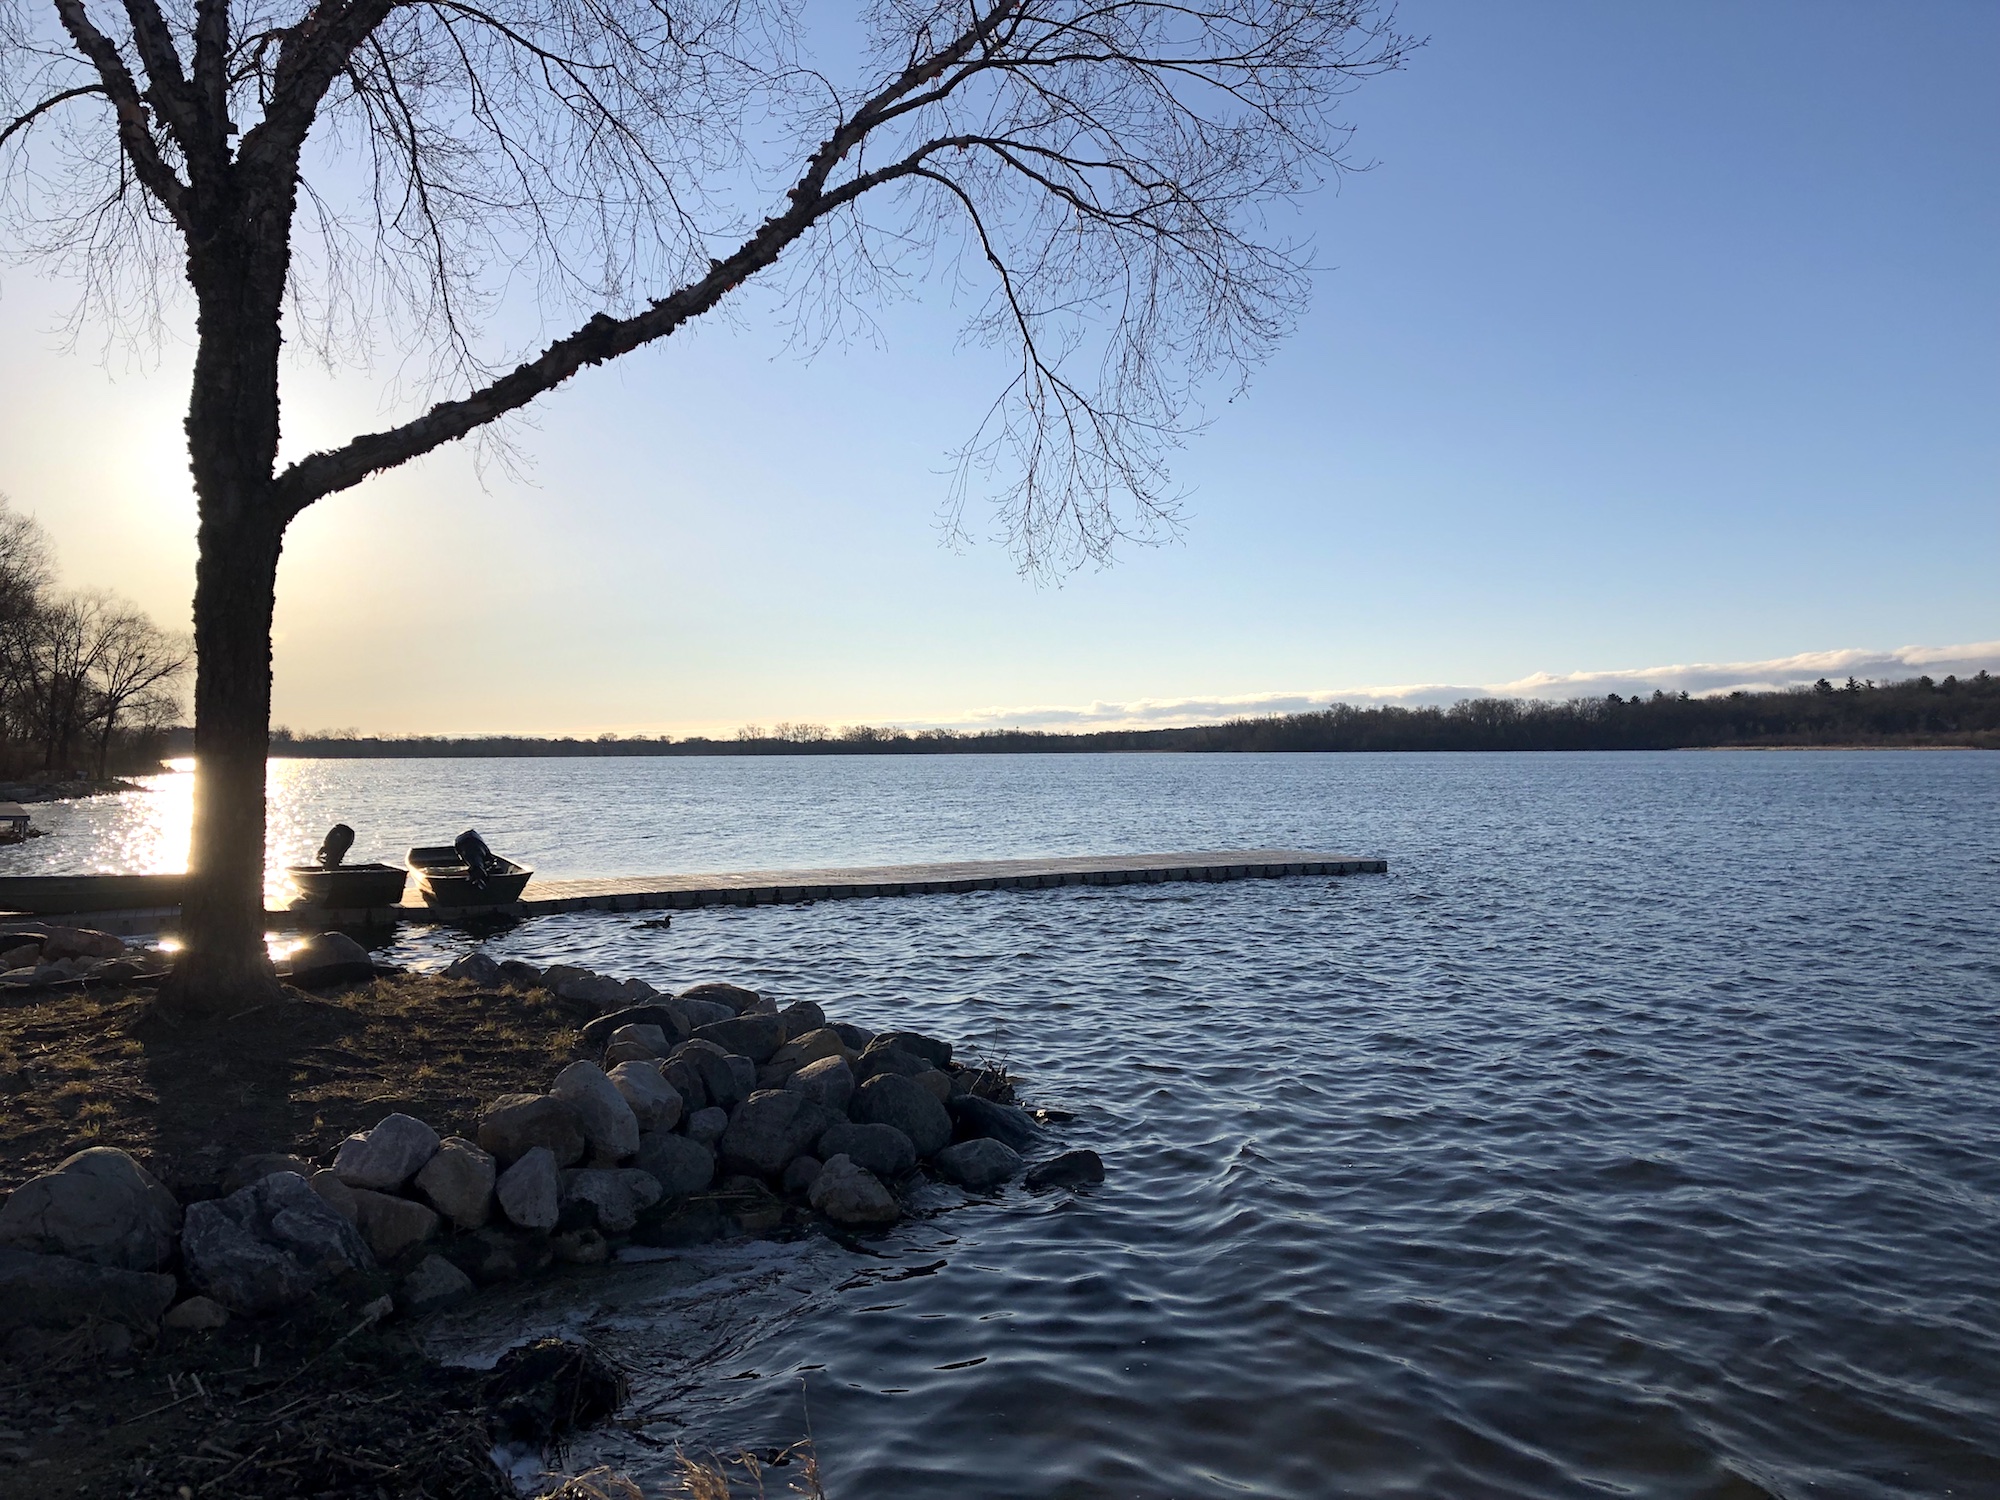 Lake Wingra on April 13, 2019.